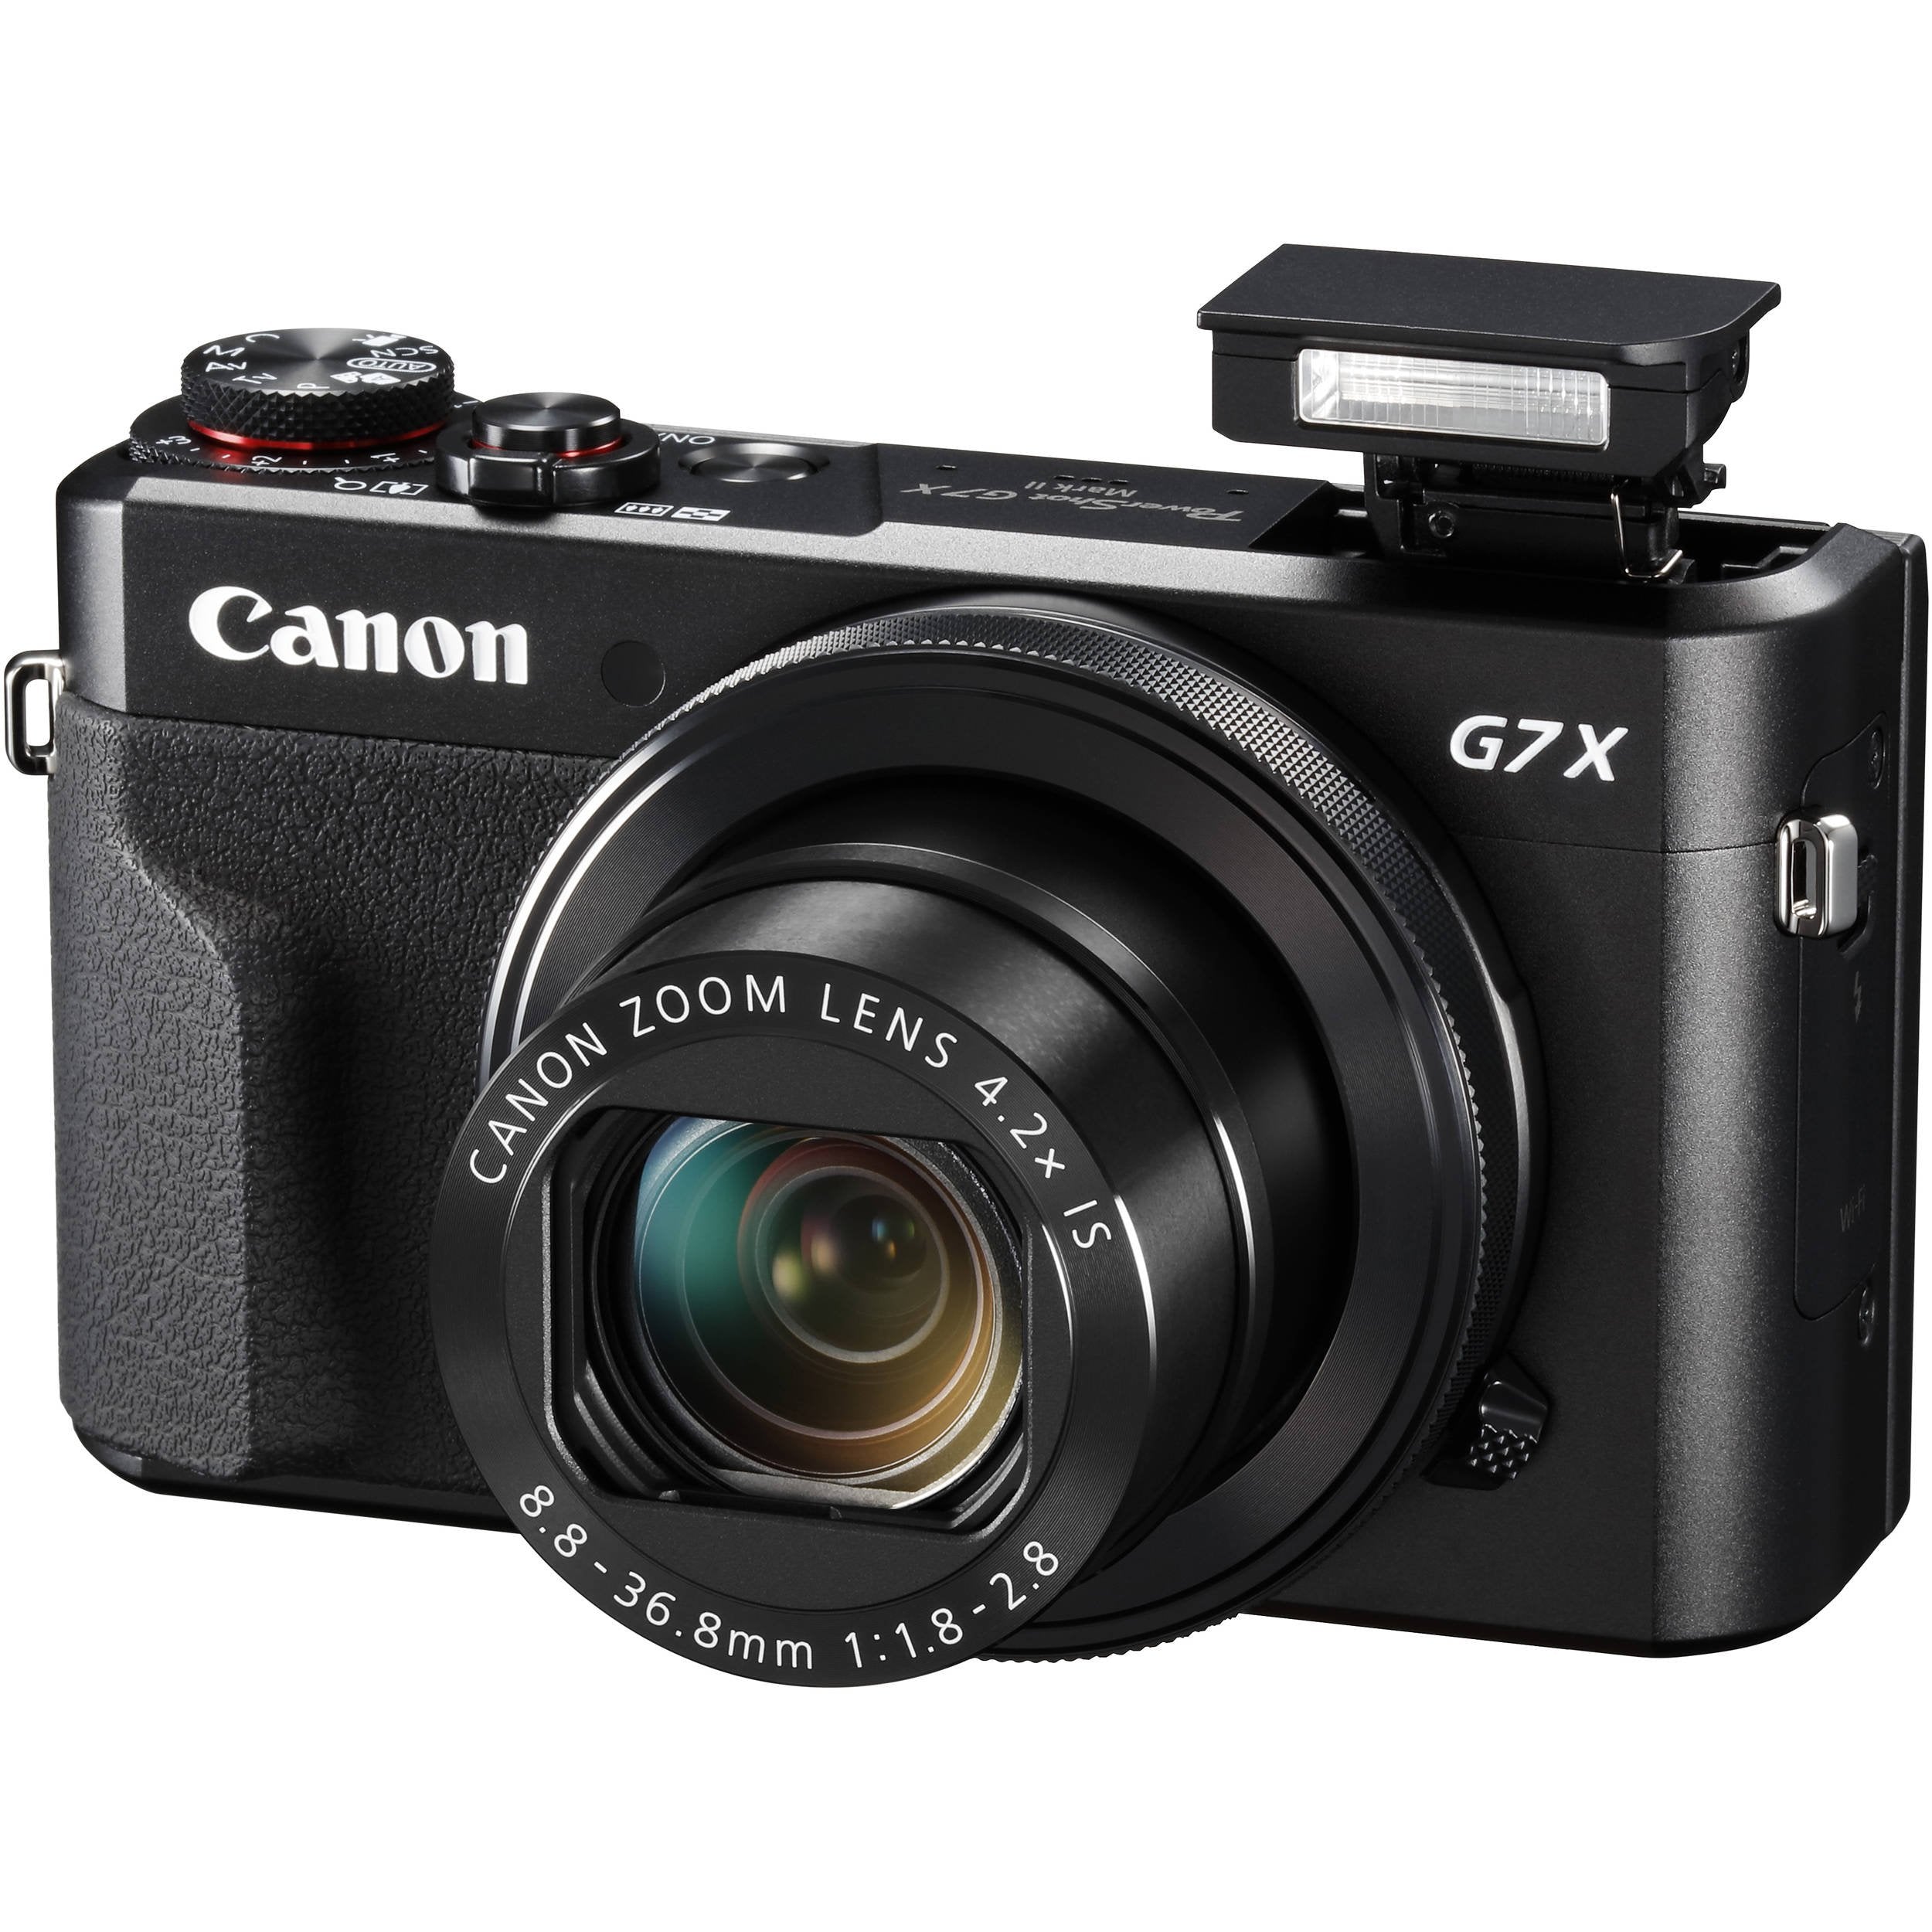 Canon PowerShot G7 X Mark II Digital Camera 1066C001 (International Model) Bundle with 32GB Memory Card + Flexible Tripod